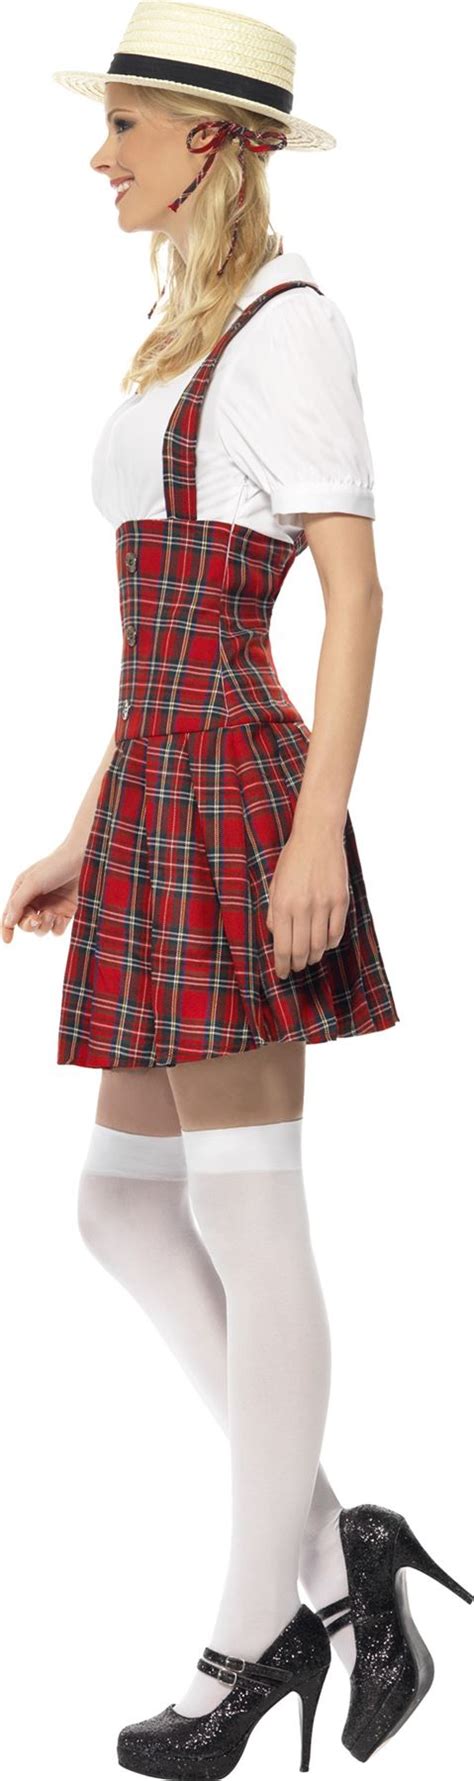 Ladies Sexy Schoolgirl Fancy Dress Costume Tartan School Girl Uniform Outfit Ebay